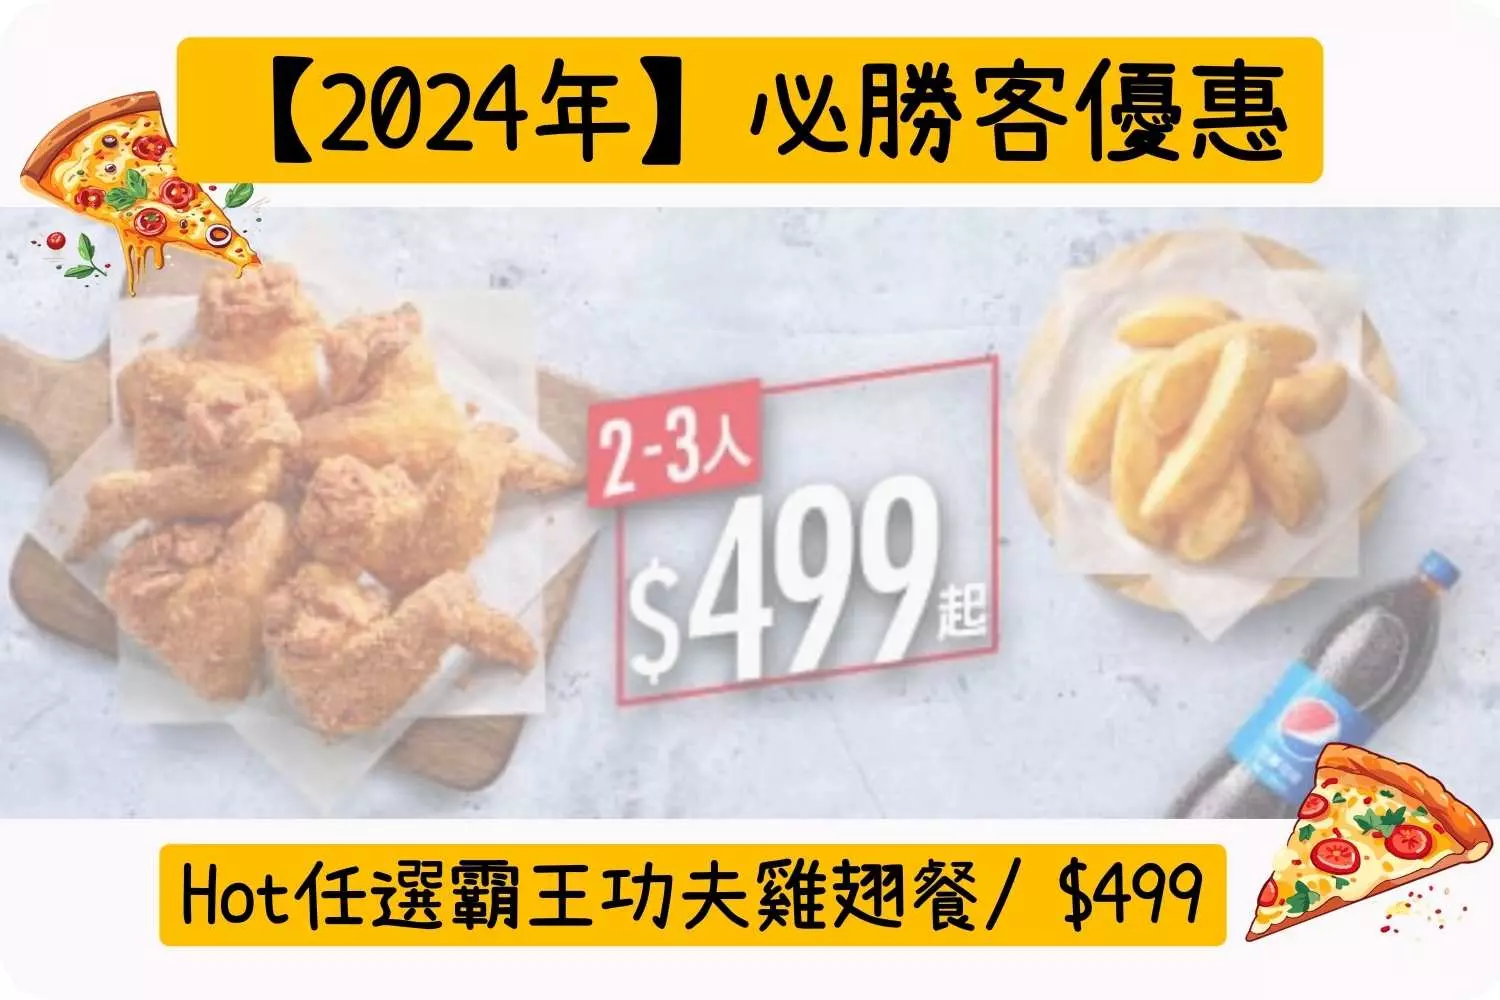 Hot任選霸王功夫雞翅餐/ $499